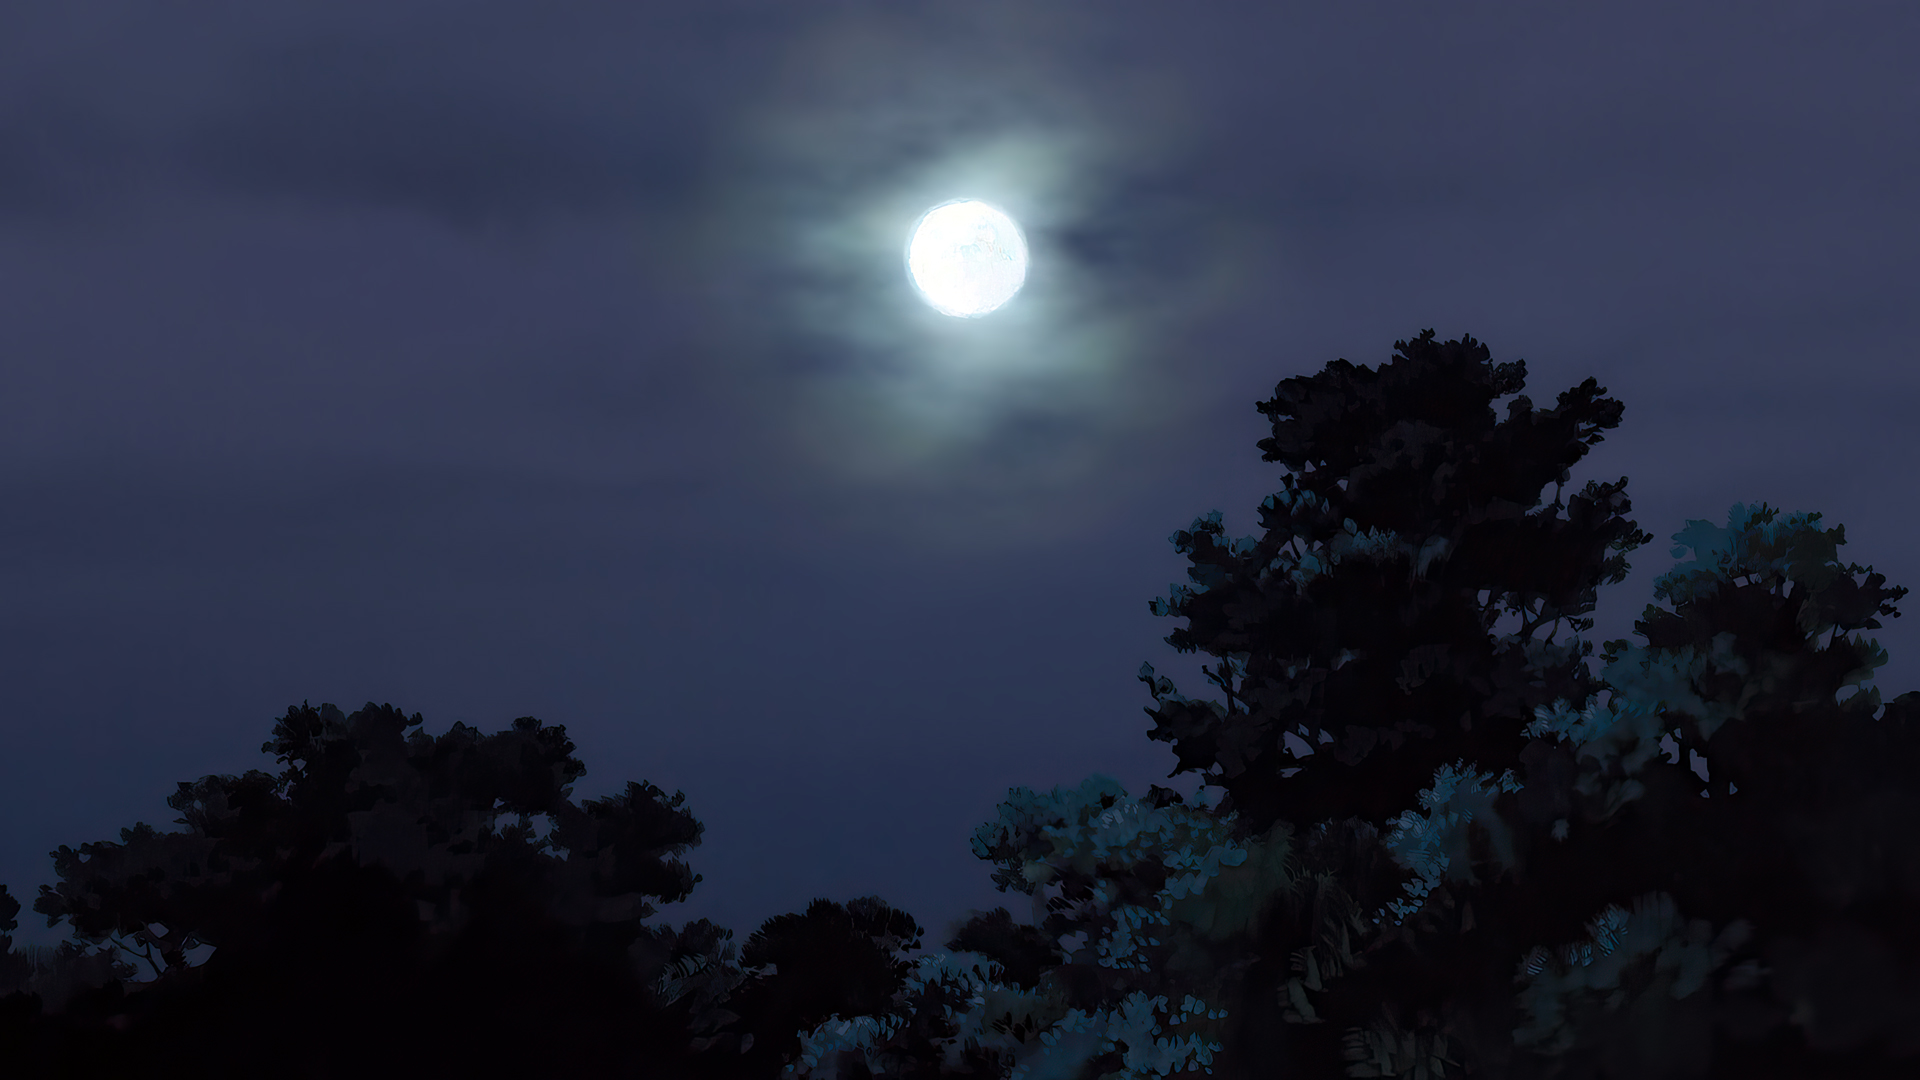 Kokuriko Zaka Kara Animated Movies Anime Animation Film Stills Studio Ghibli Moon Trees Forest Night 1920x1080